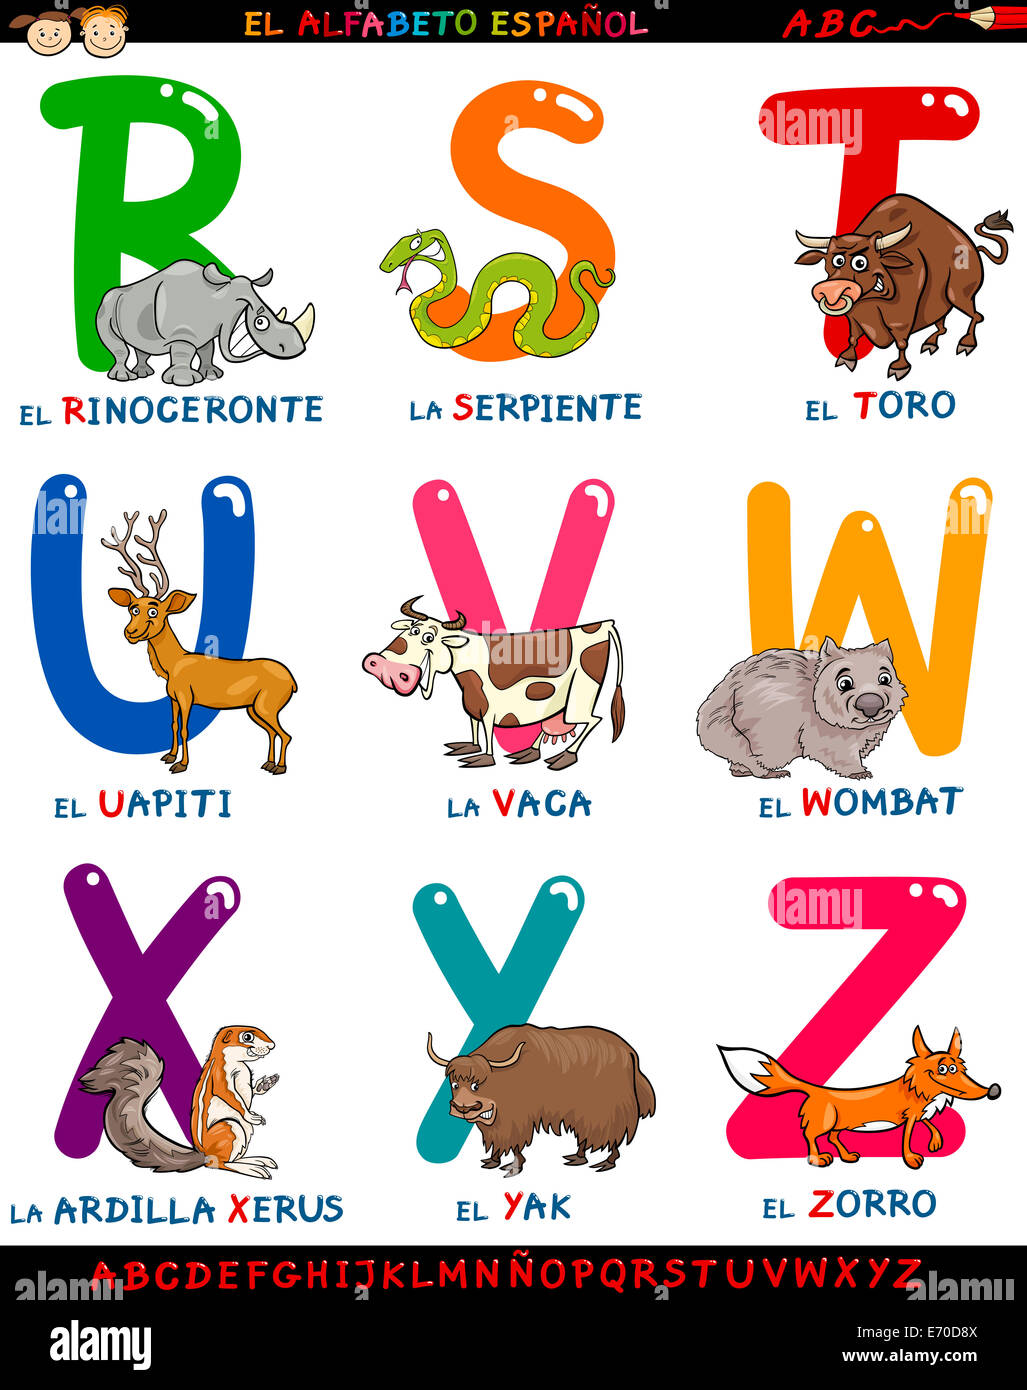 Cartoon Illustration Of Colorful Spanish Alphabet Or Alfabeto Espanol Stock Photo Alamy